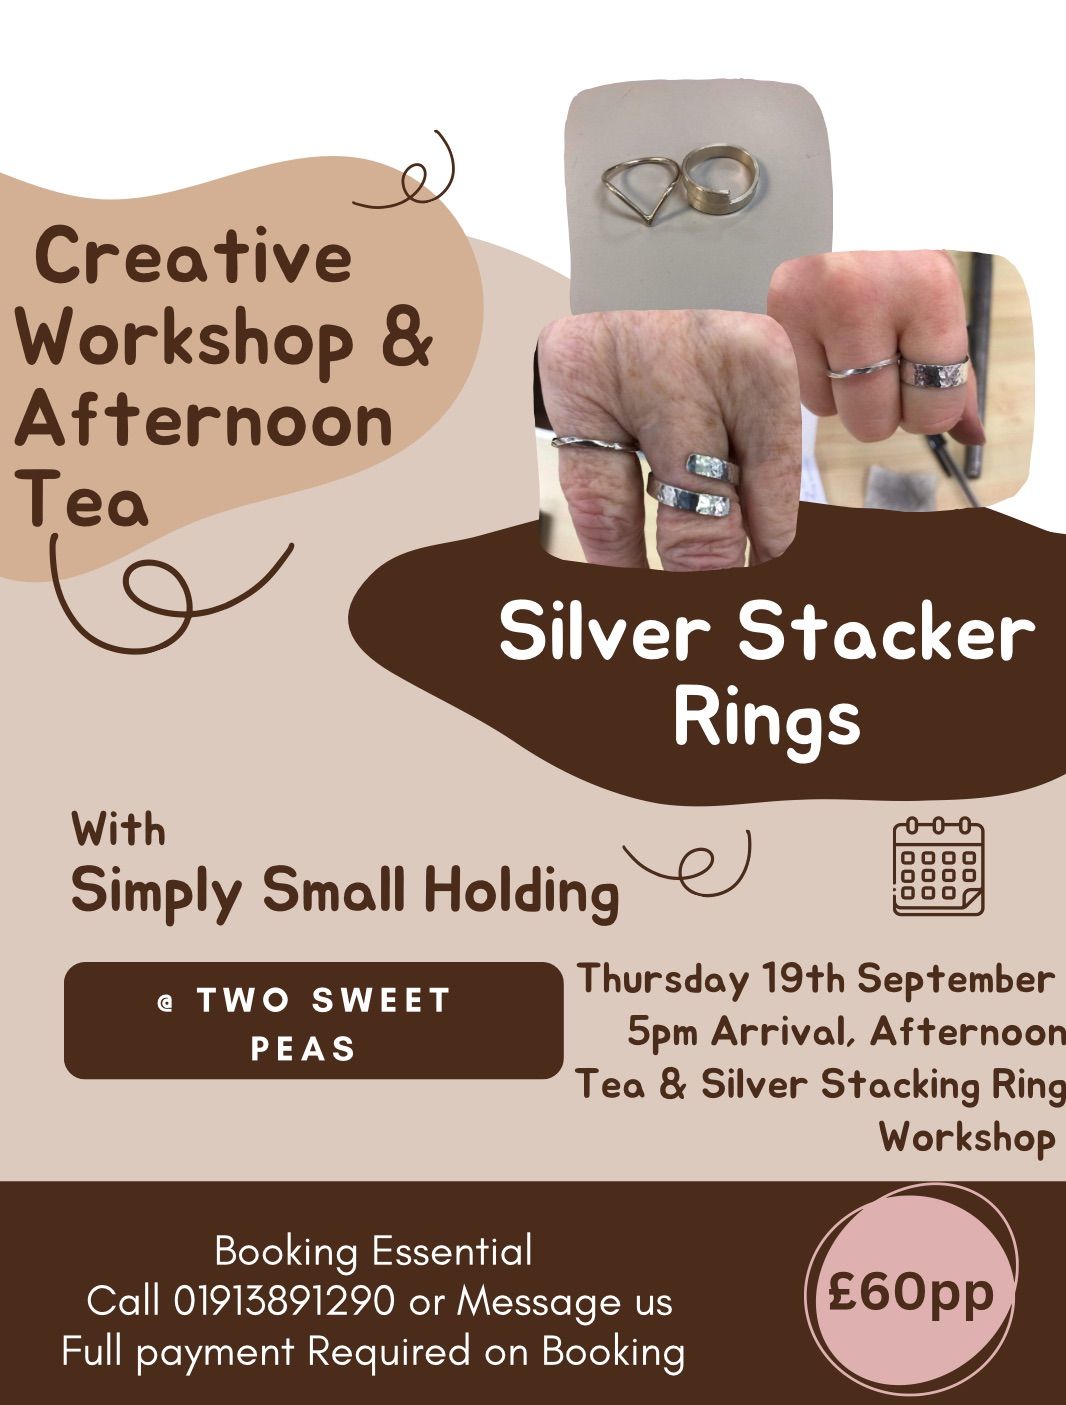 Silver stacker ring workshop